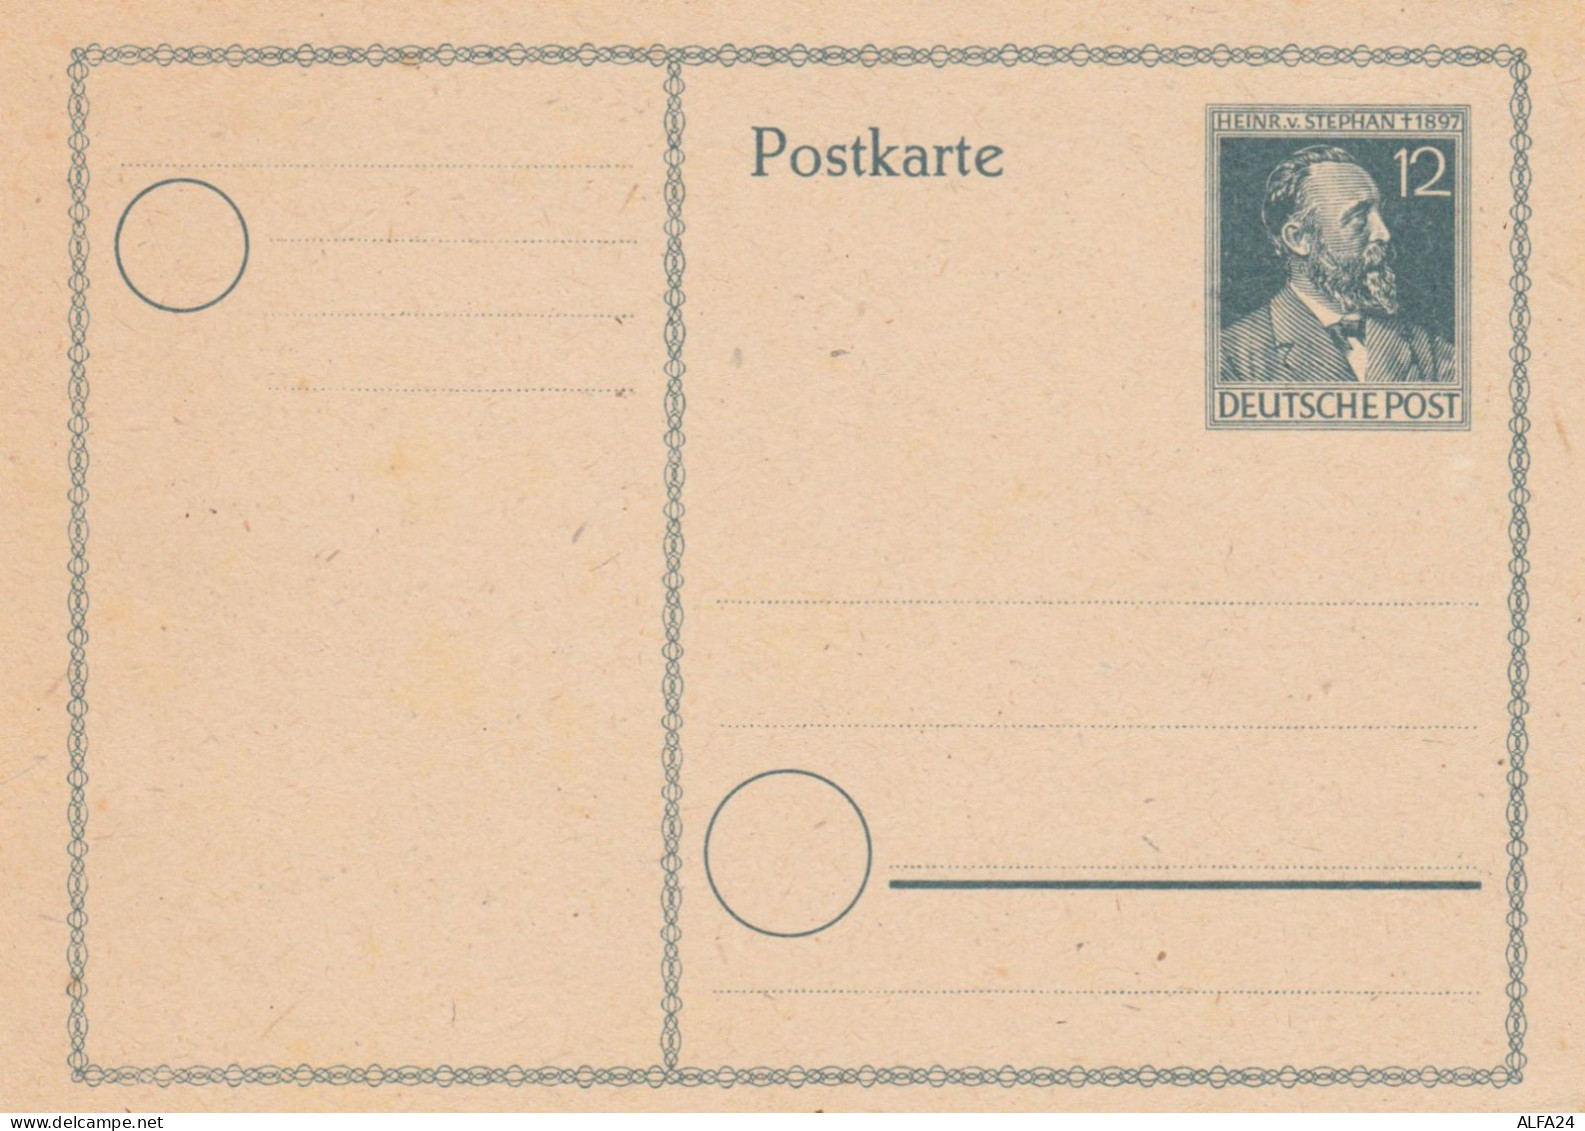 INTERO POSTALE 1948 HEINR STEPHAN NUOVO 12 PF GERMANIA (KP588 - Postkaarten - Ongebruikt